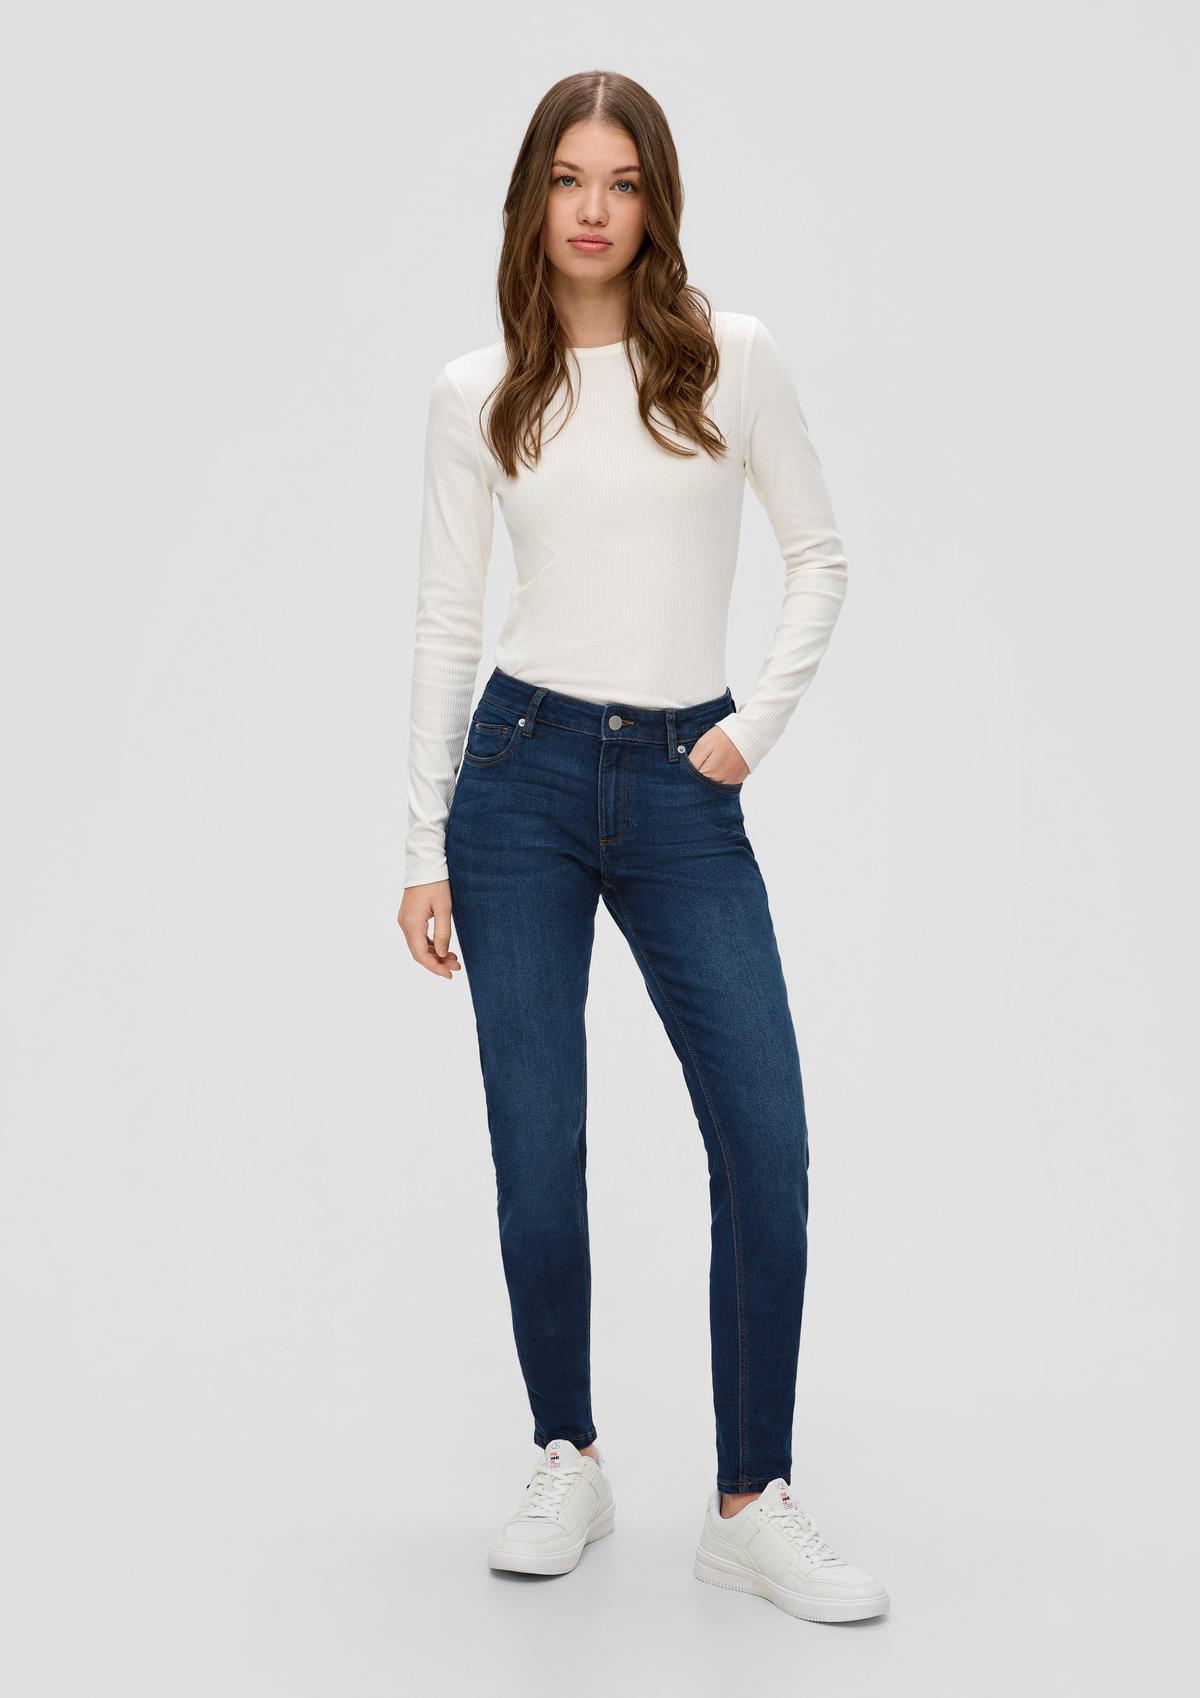 Skinny & Very Slim Jeans for Women